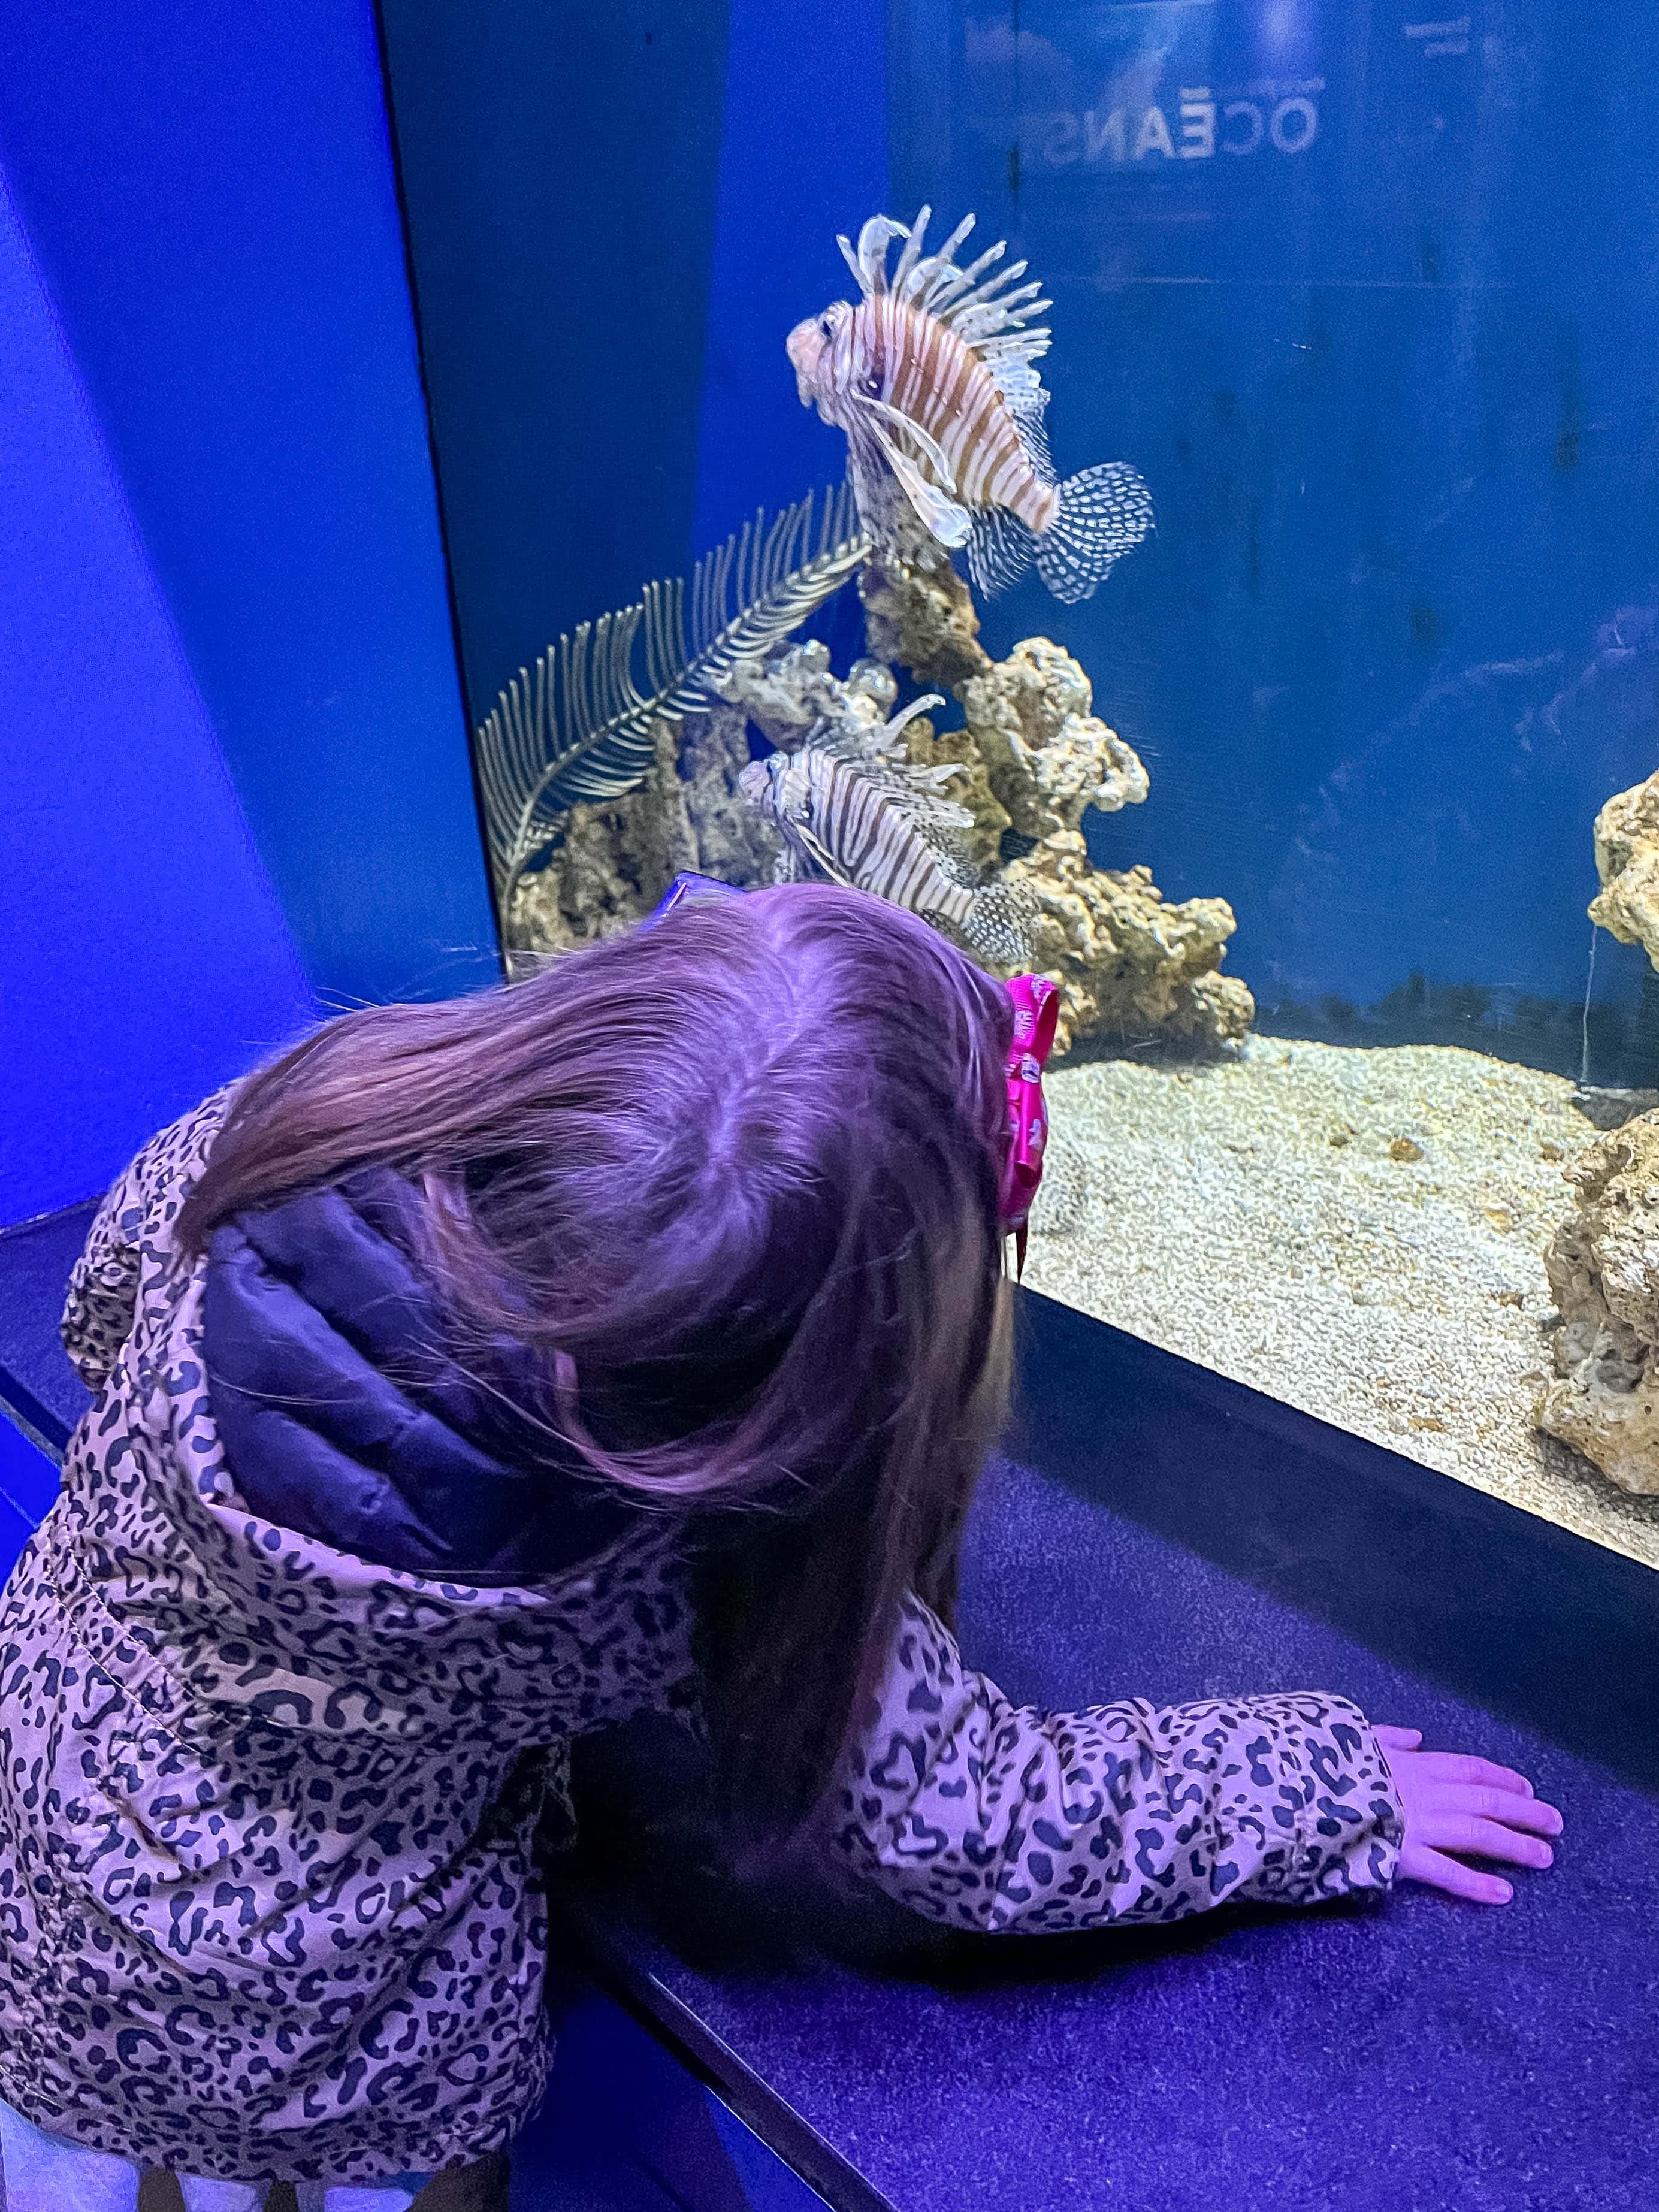 Child looking at lion fish inside the Indianapolis Zoo aquarium.